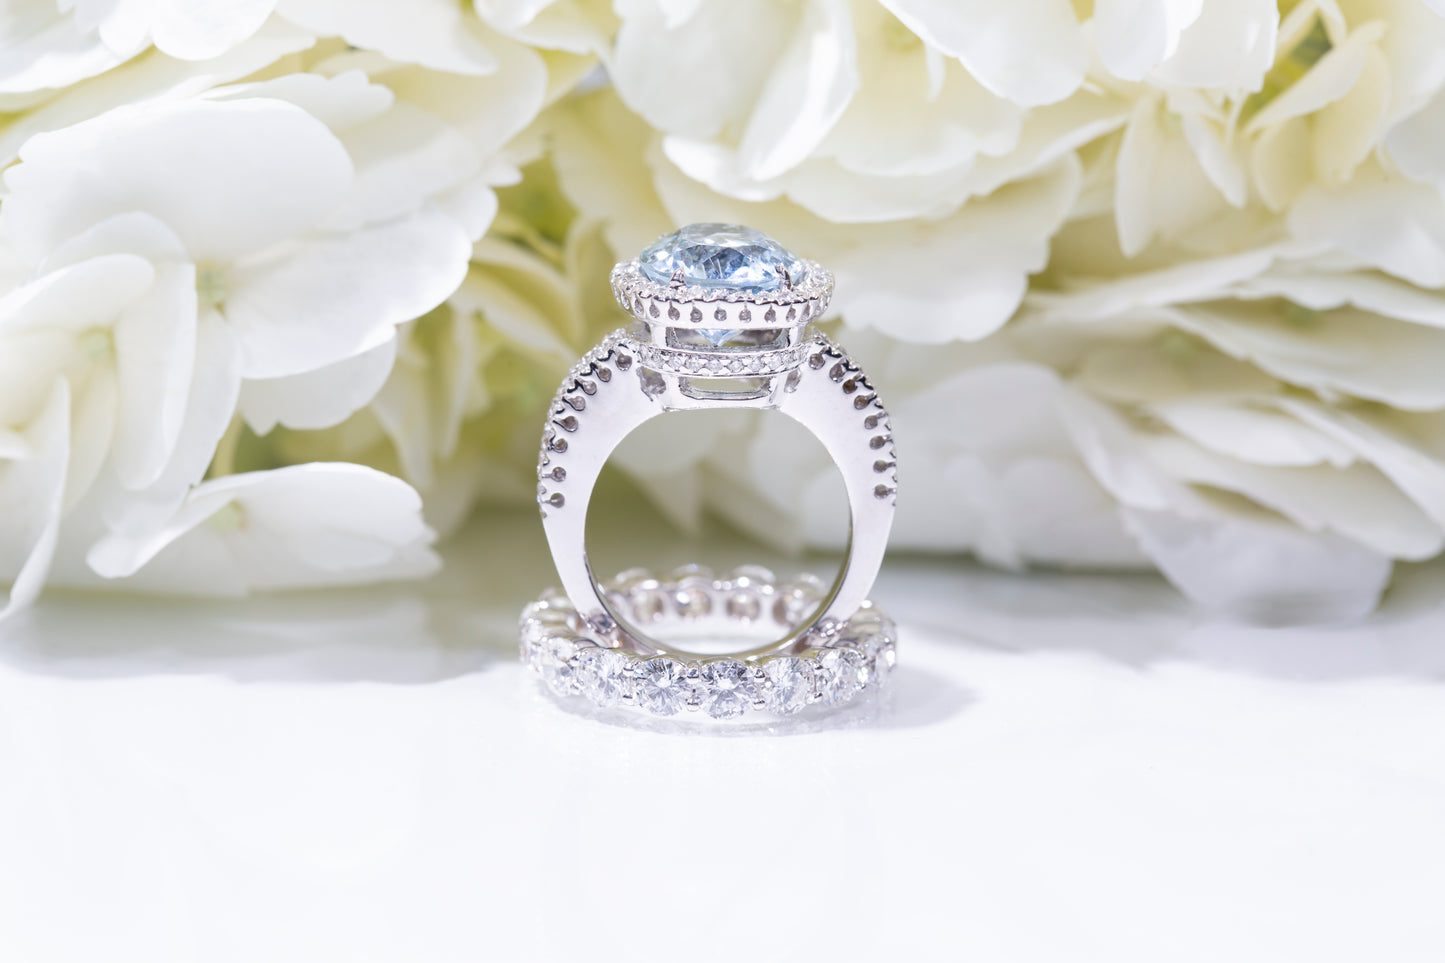 5.20CT Aquamarine 18K White Gold Engagement Ring with Diamonds